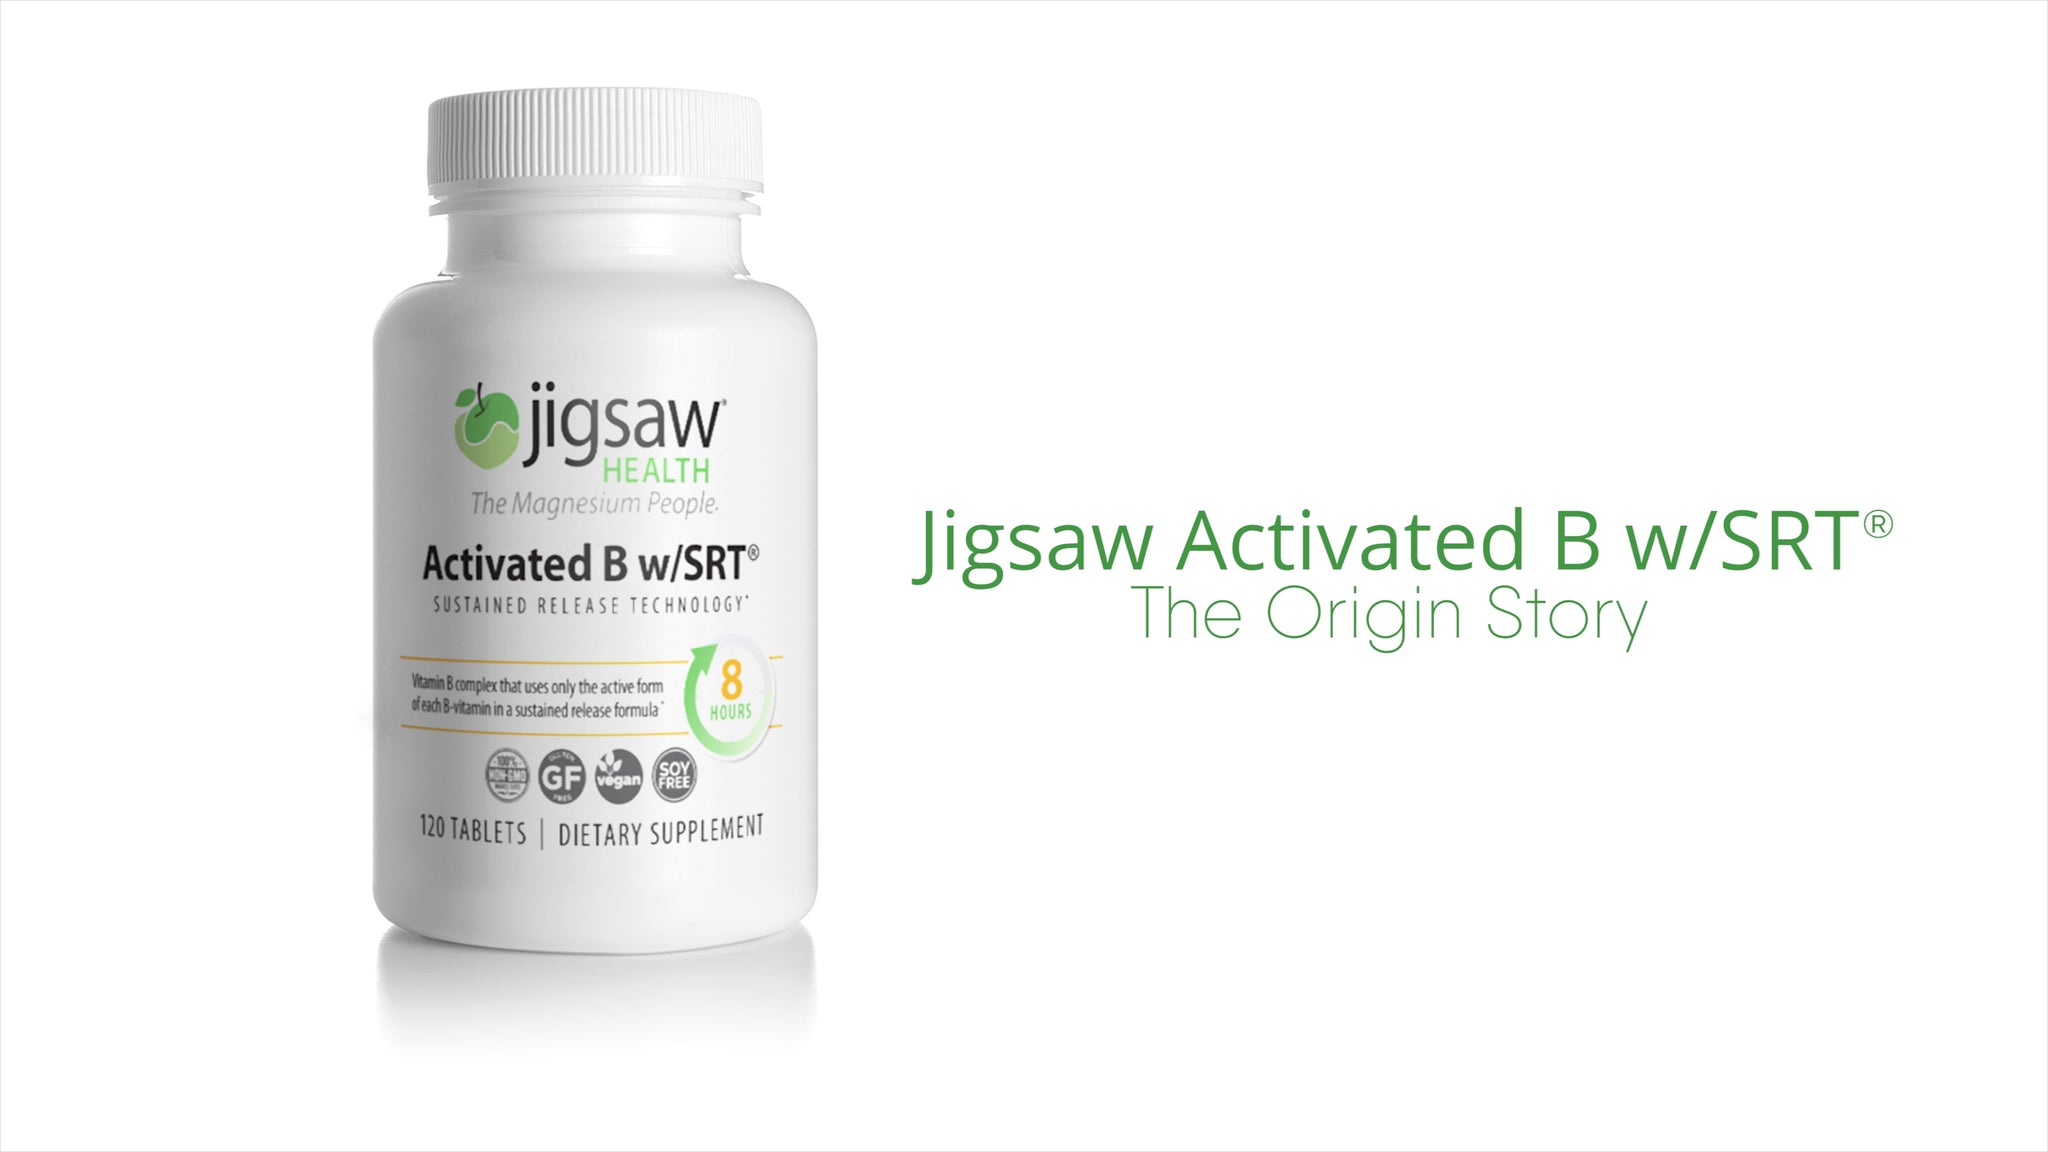 Jigsaw Activated B w/SRT®: The Origin Story